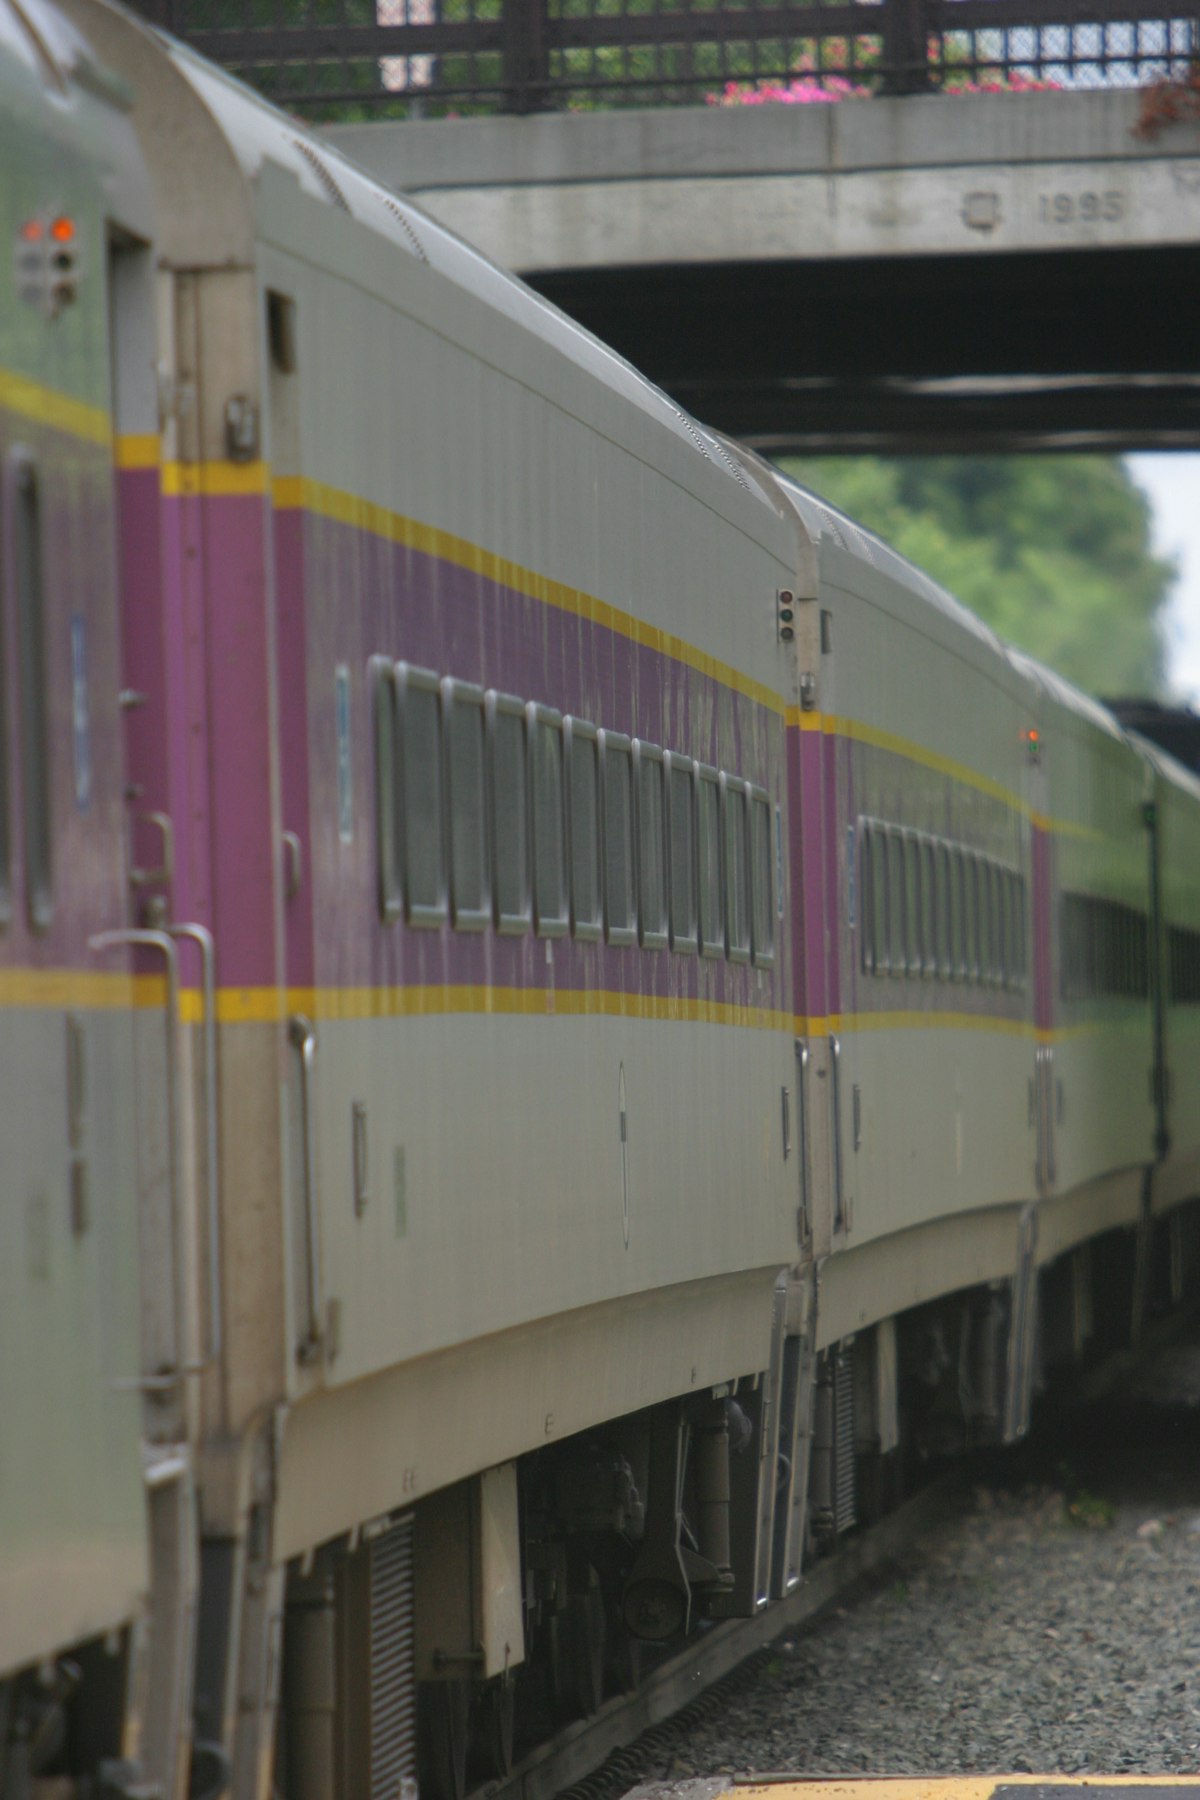 NH Executive Council nixes regional commuter rail plan